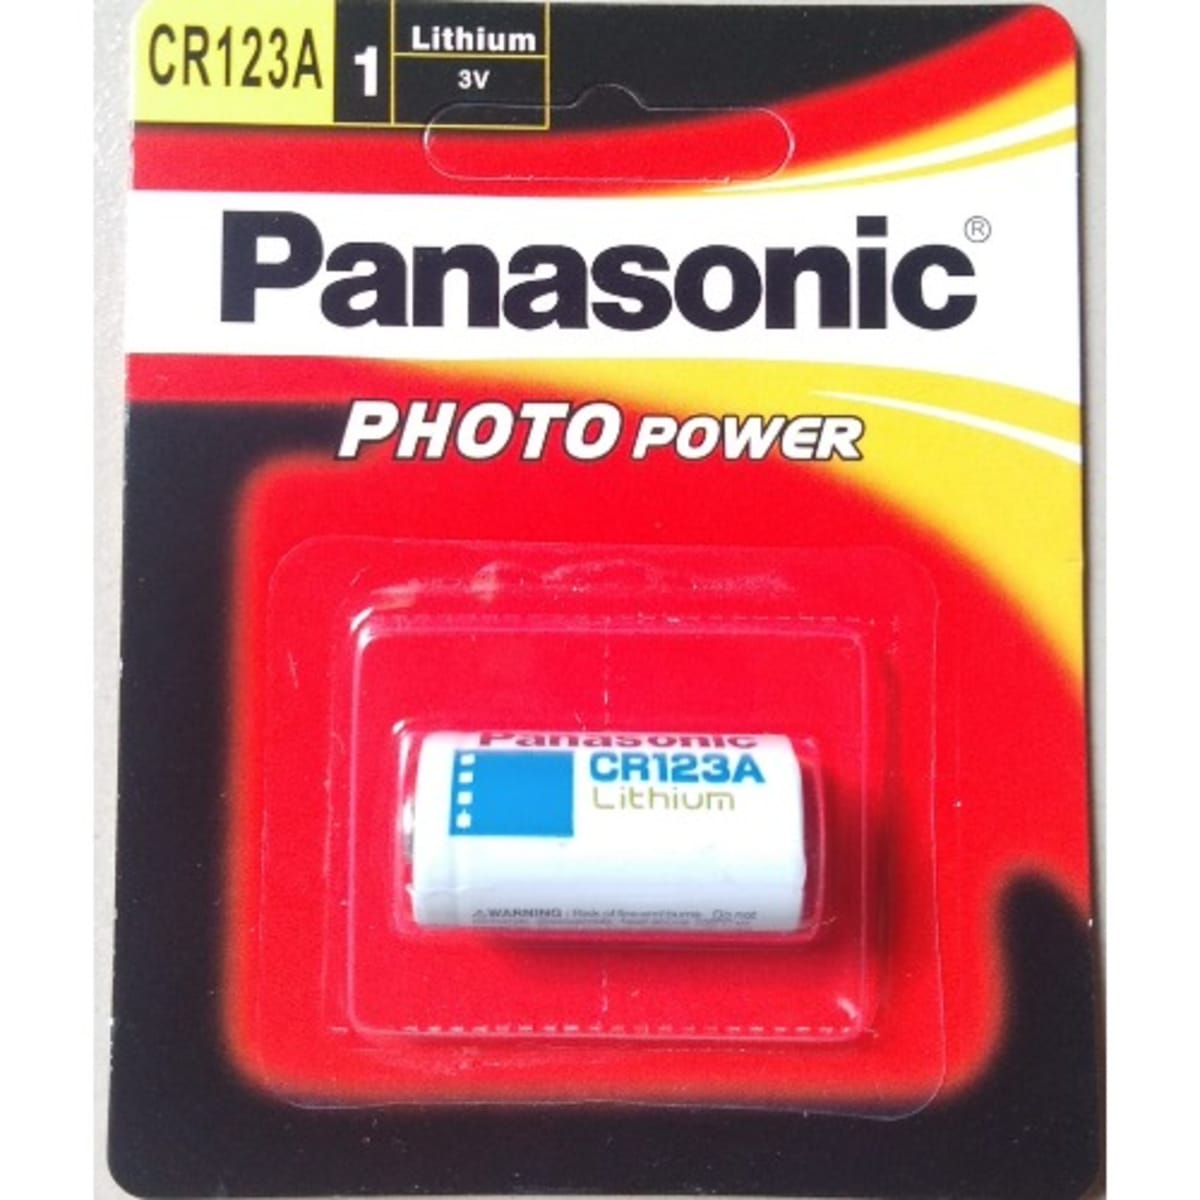 CR123A CR123 Panasonic 3V Battery (12 Pieces) -3 Volt Lithium-Camera, Photo